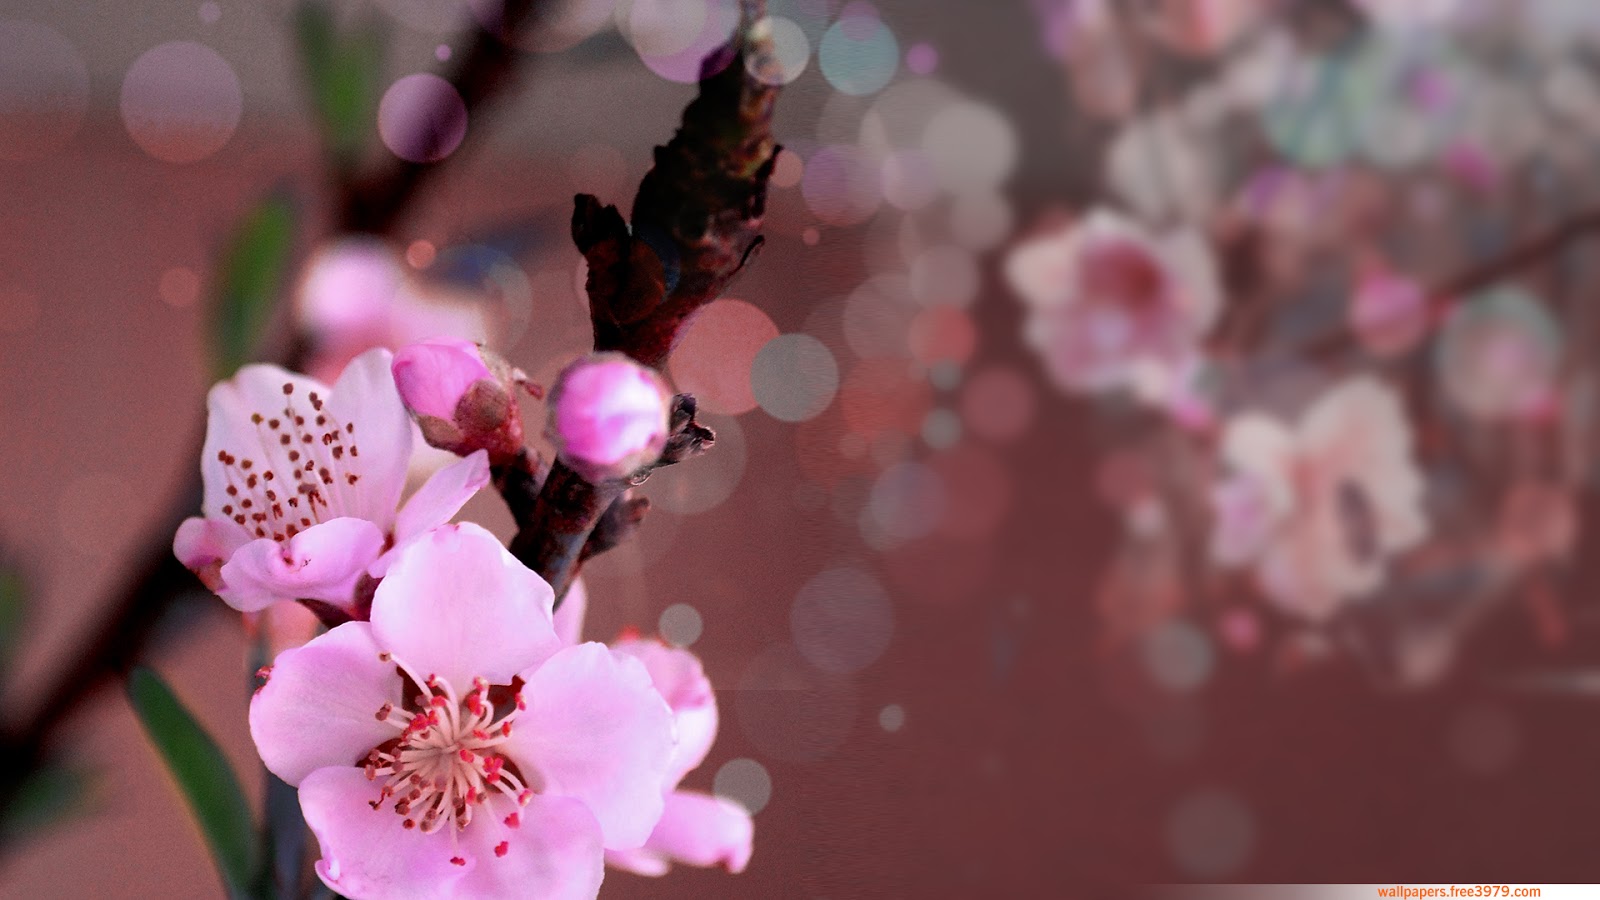 Peach Blossom Flower Free Wallpaper. Wallpaper Wallpaper Free 3979